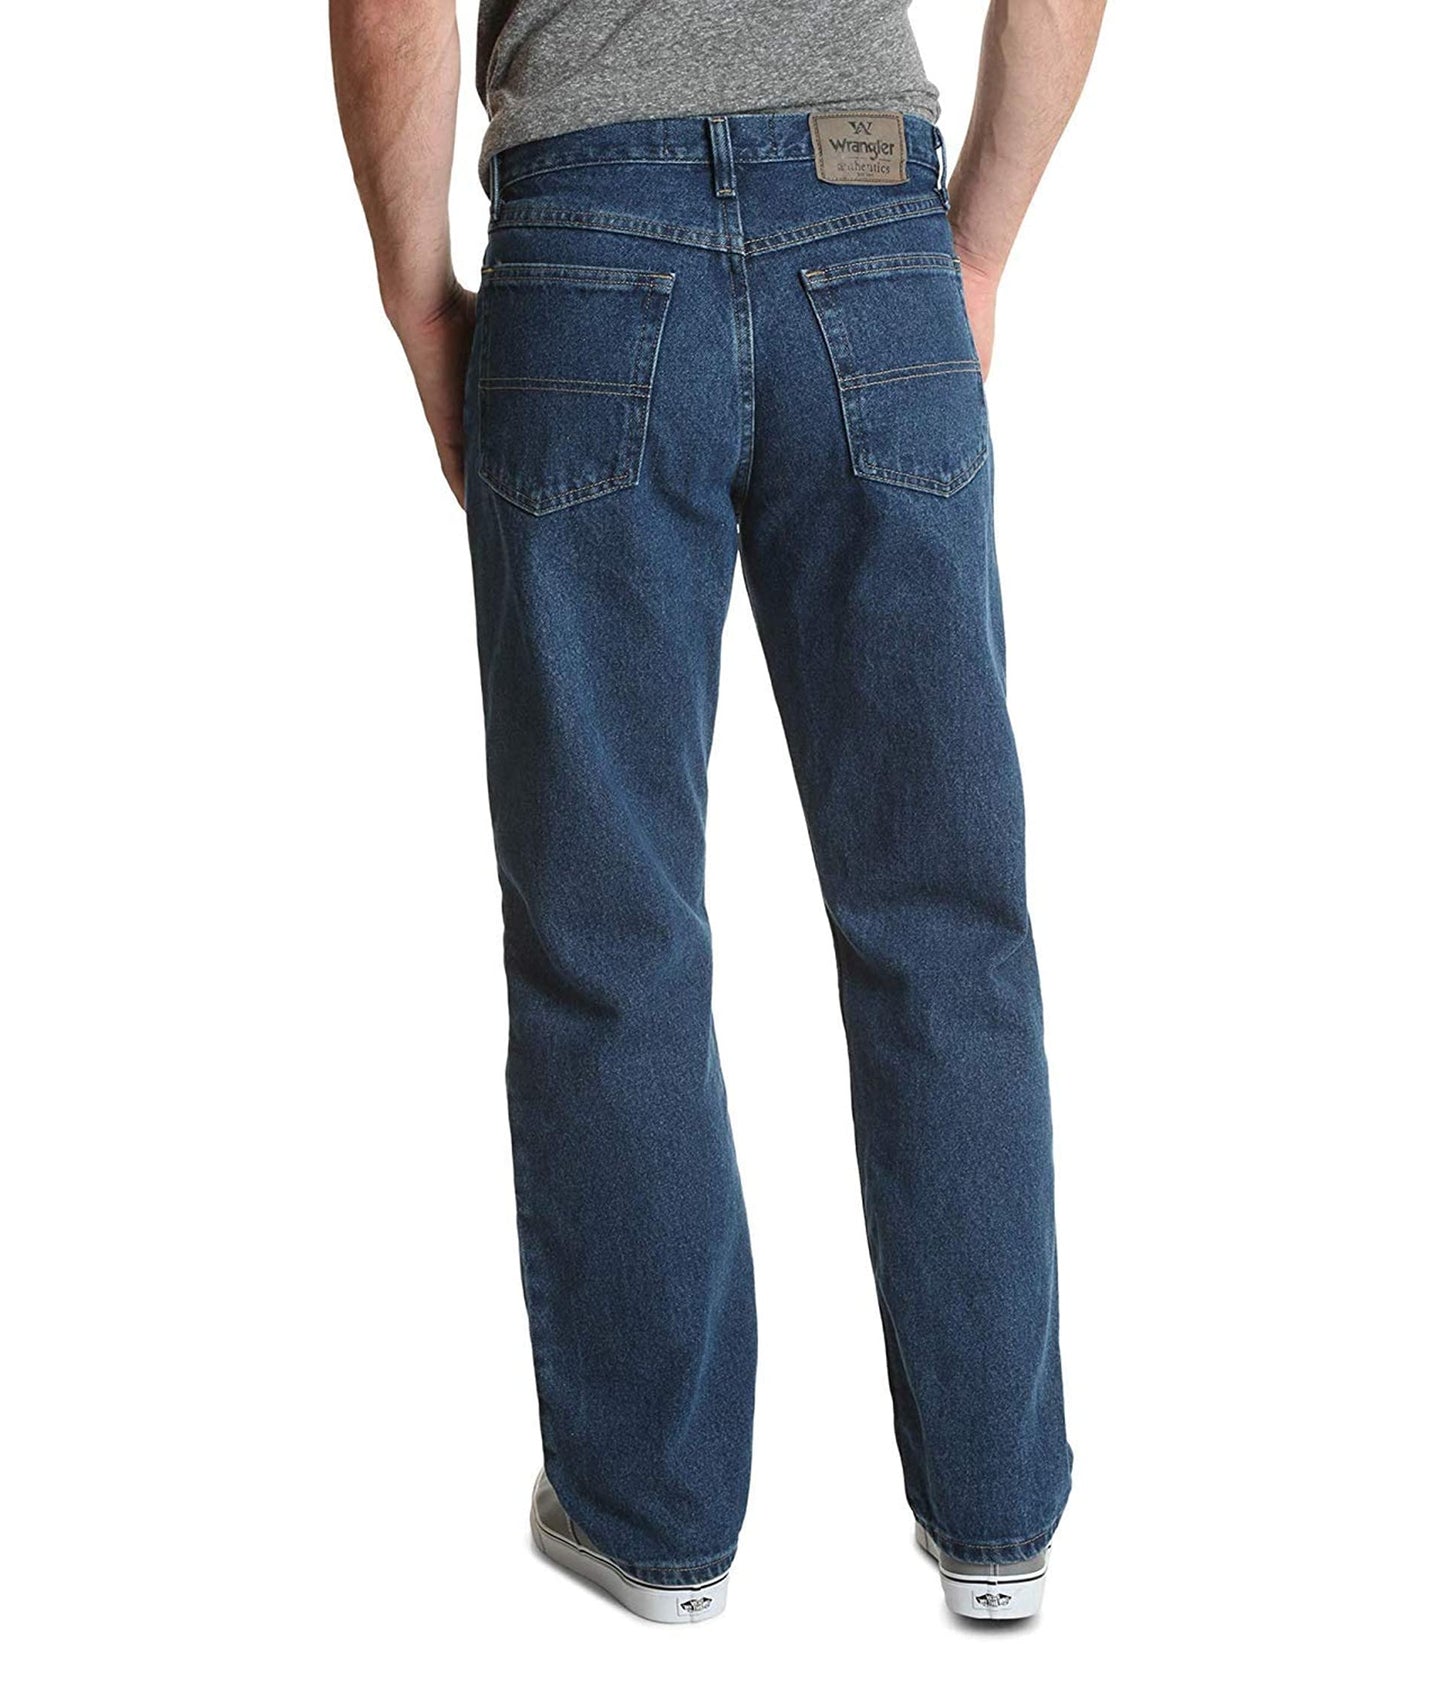 Wrangler Authentics Men's Classic 5-Pocket Relaxed Fit Cotton Jean, Dark Stonewash, 34W X 31L